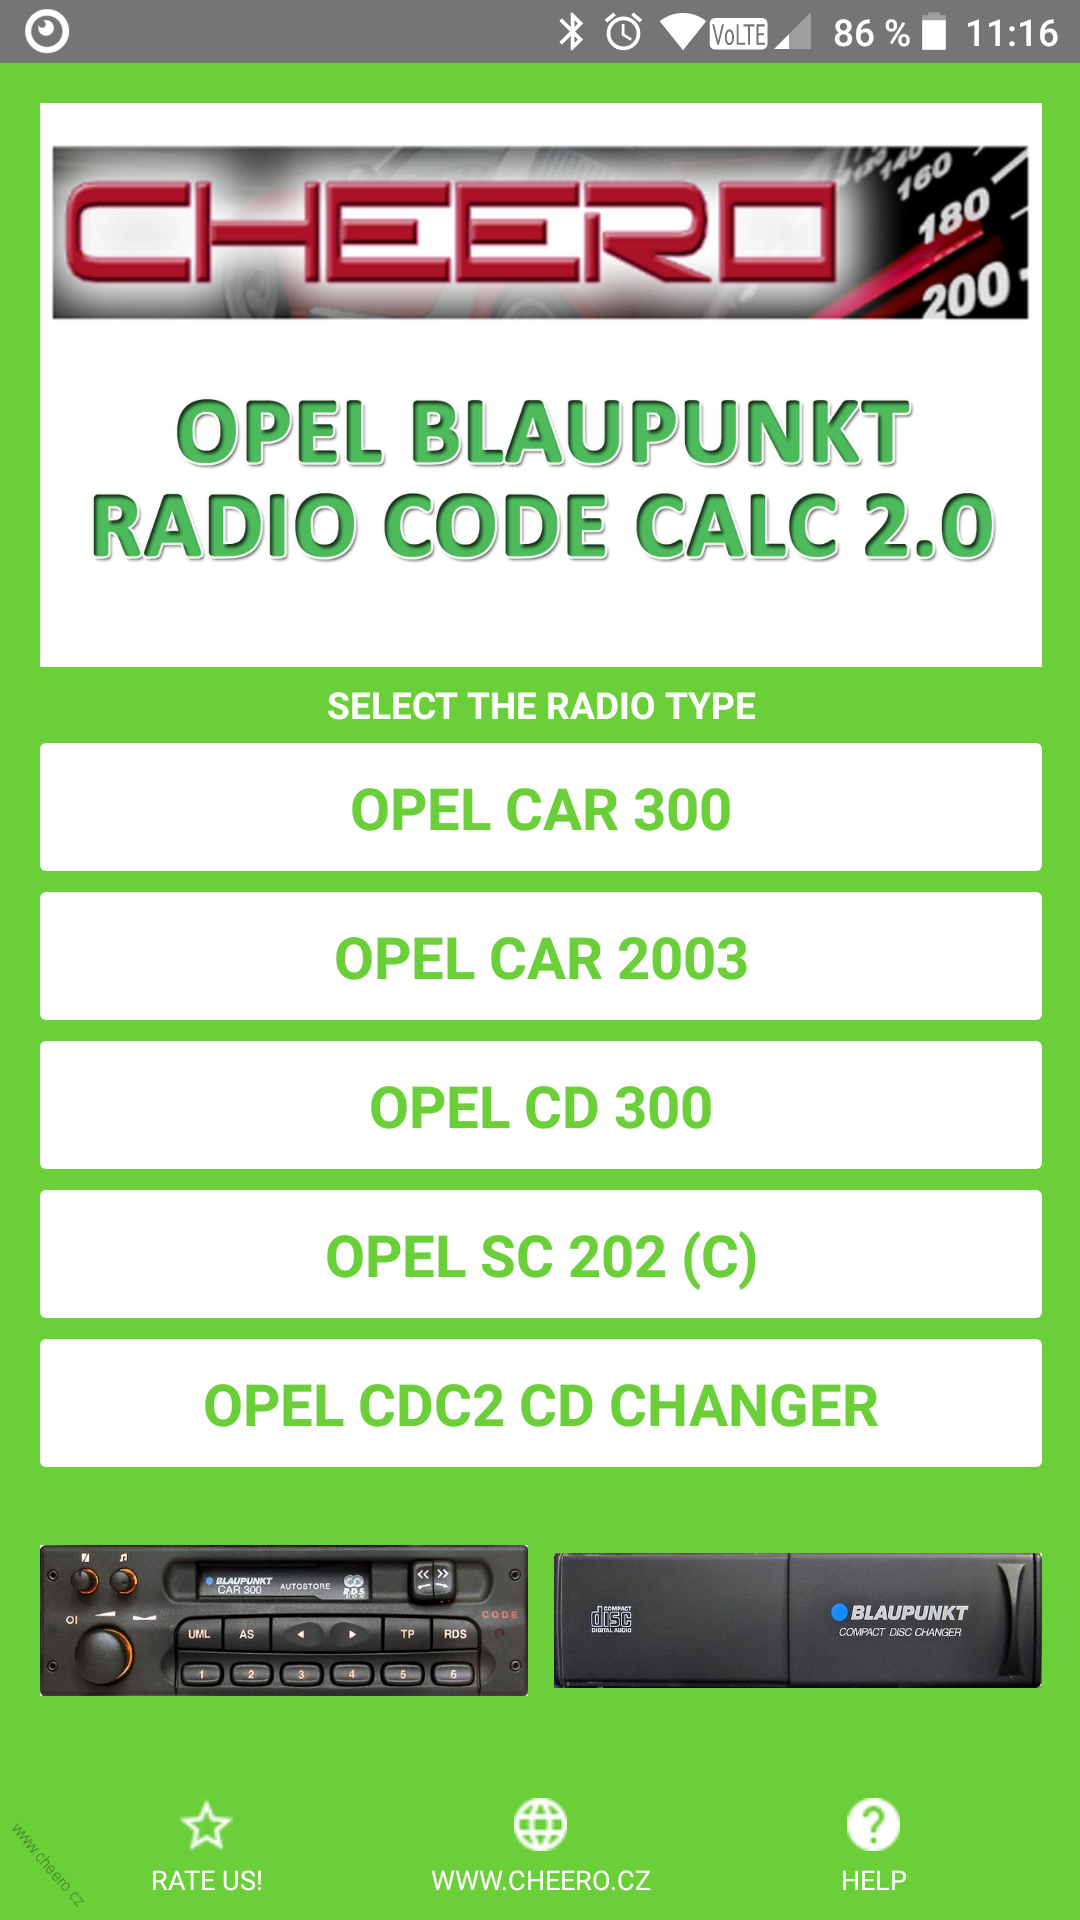 OPEL BLAUPUNKT RADIO CODE CALC - CAR300 CAR2003 CD300 SC202 CDC2